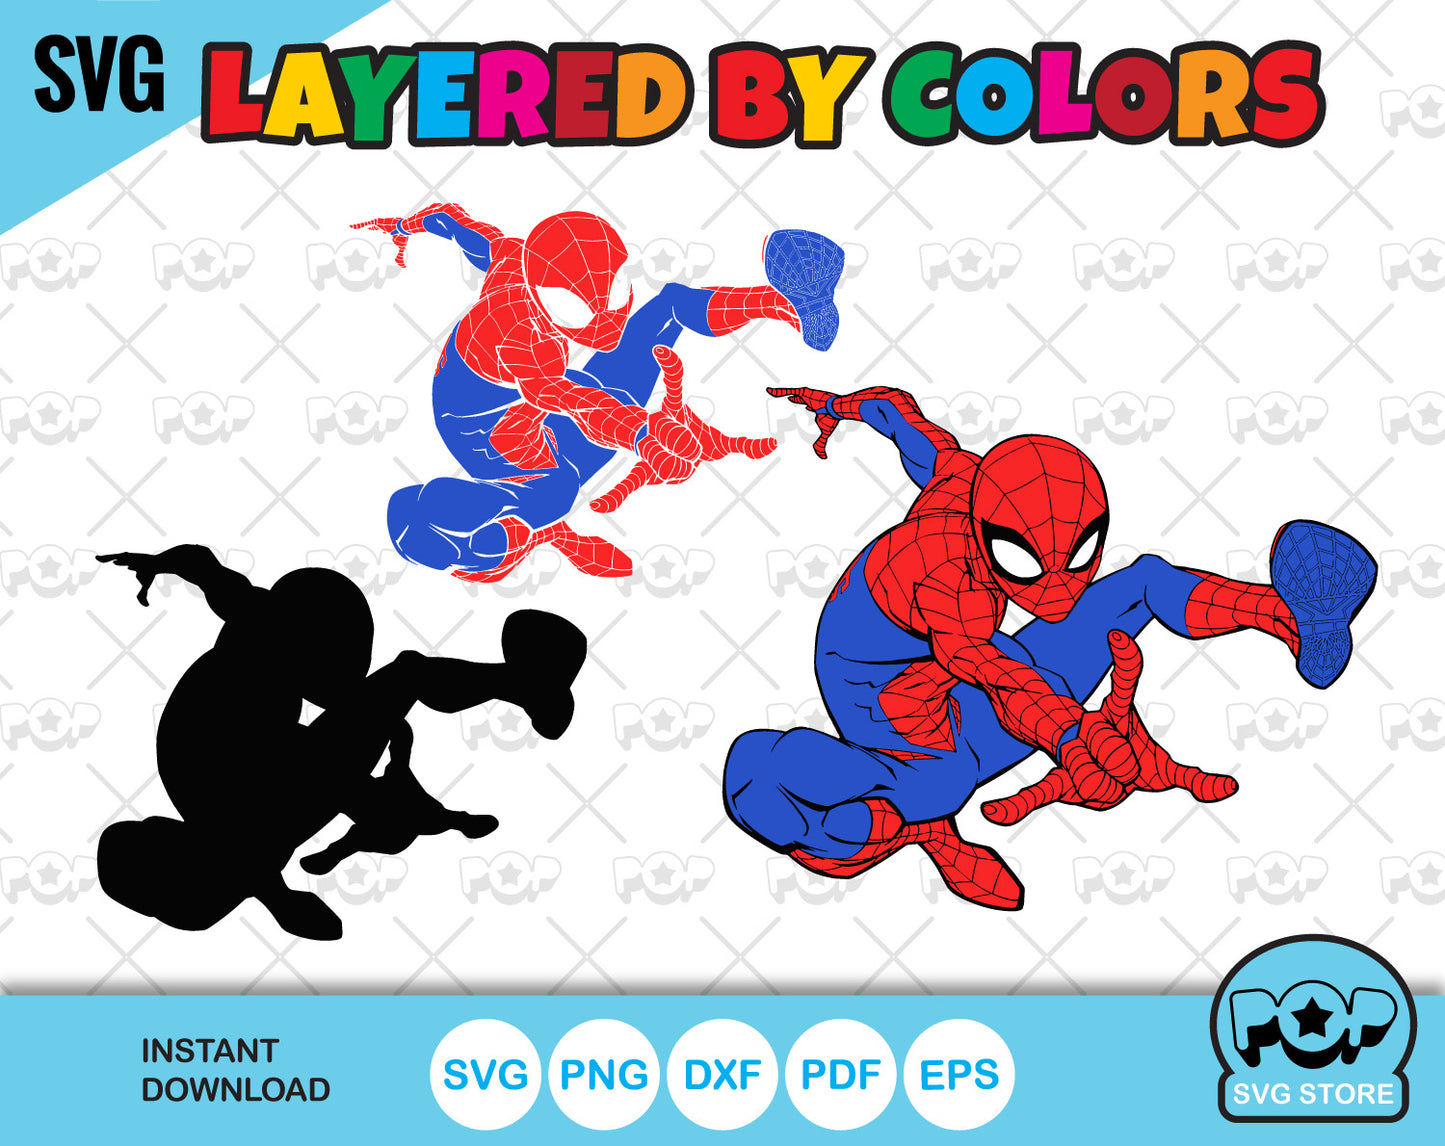 Spider-Man 100 cliparts bundle + alphabet, Spiderman SVG cut files for Cricut / Silhouette, PNG, DXF, instant download